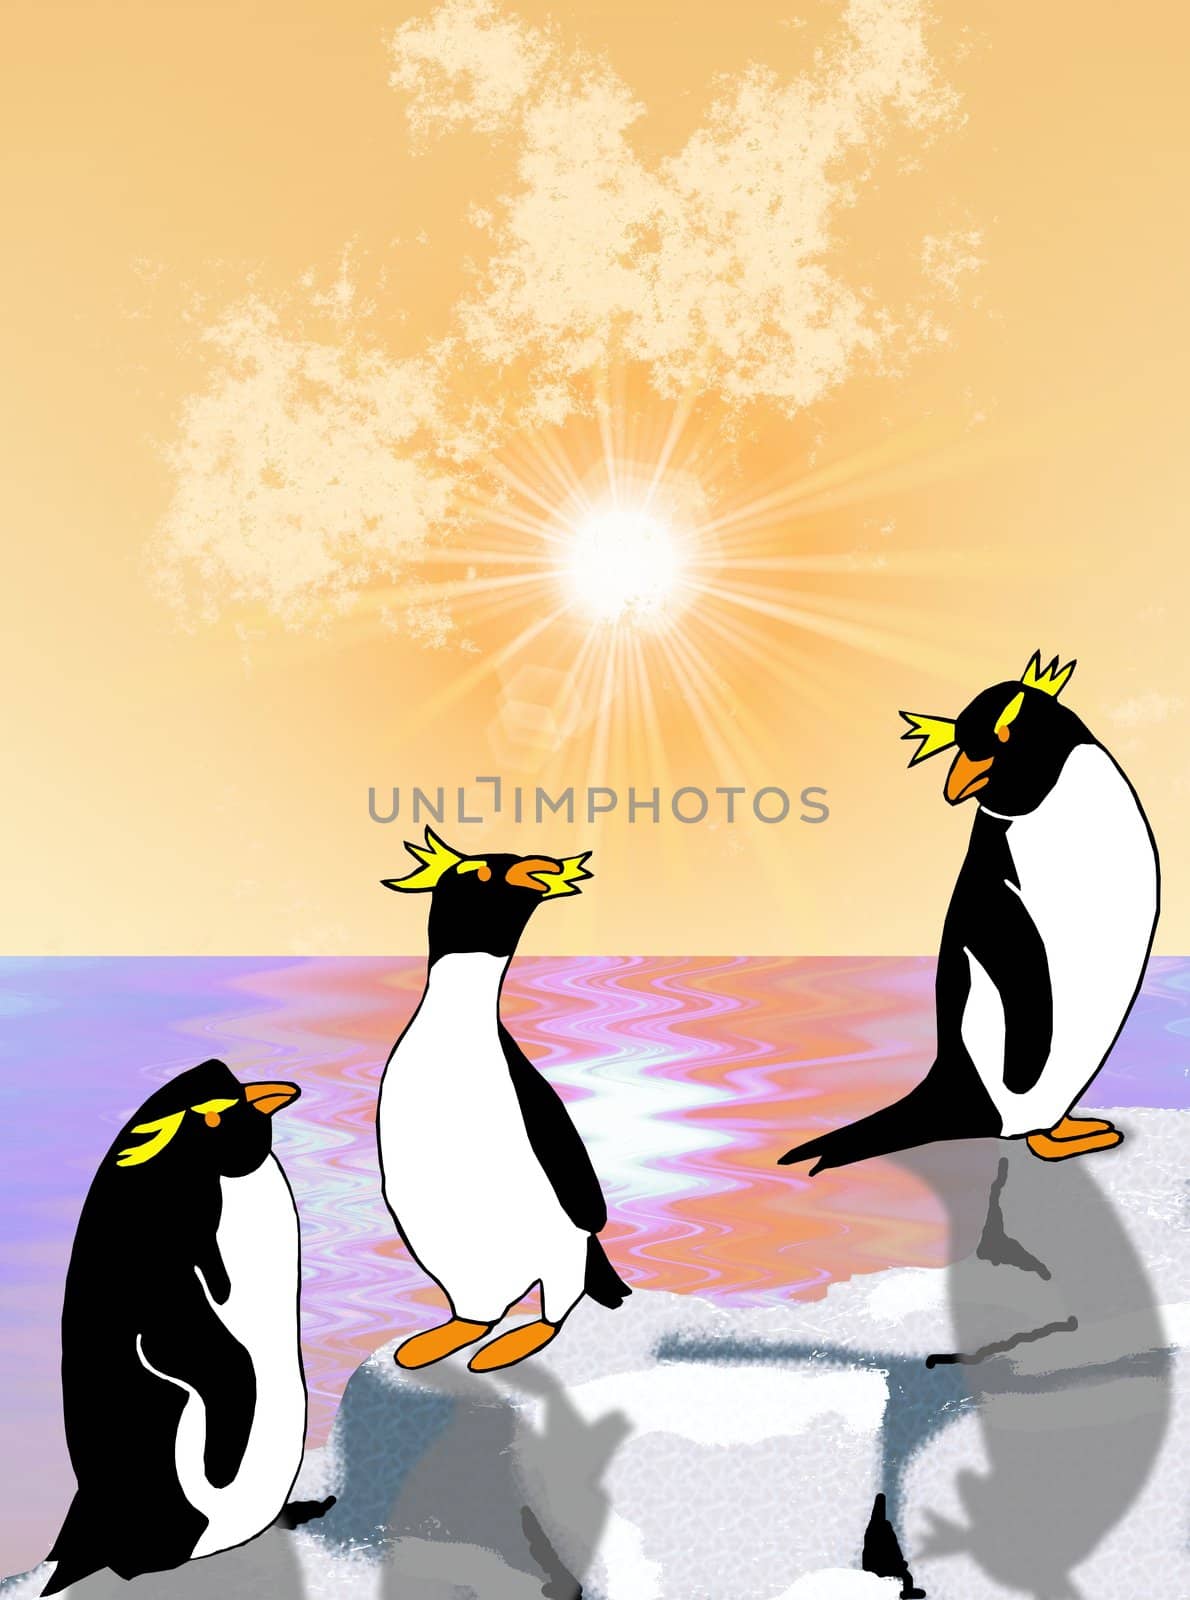 Rockhopper penguins chilling on the rocks as the sun sets over the ocean - a raster illustration.